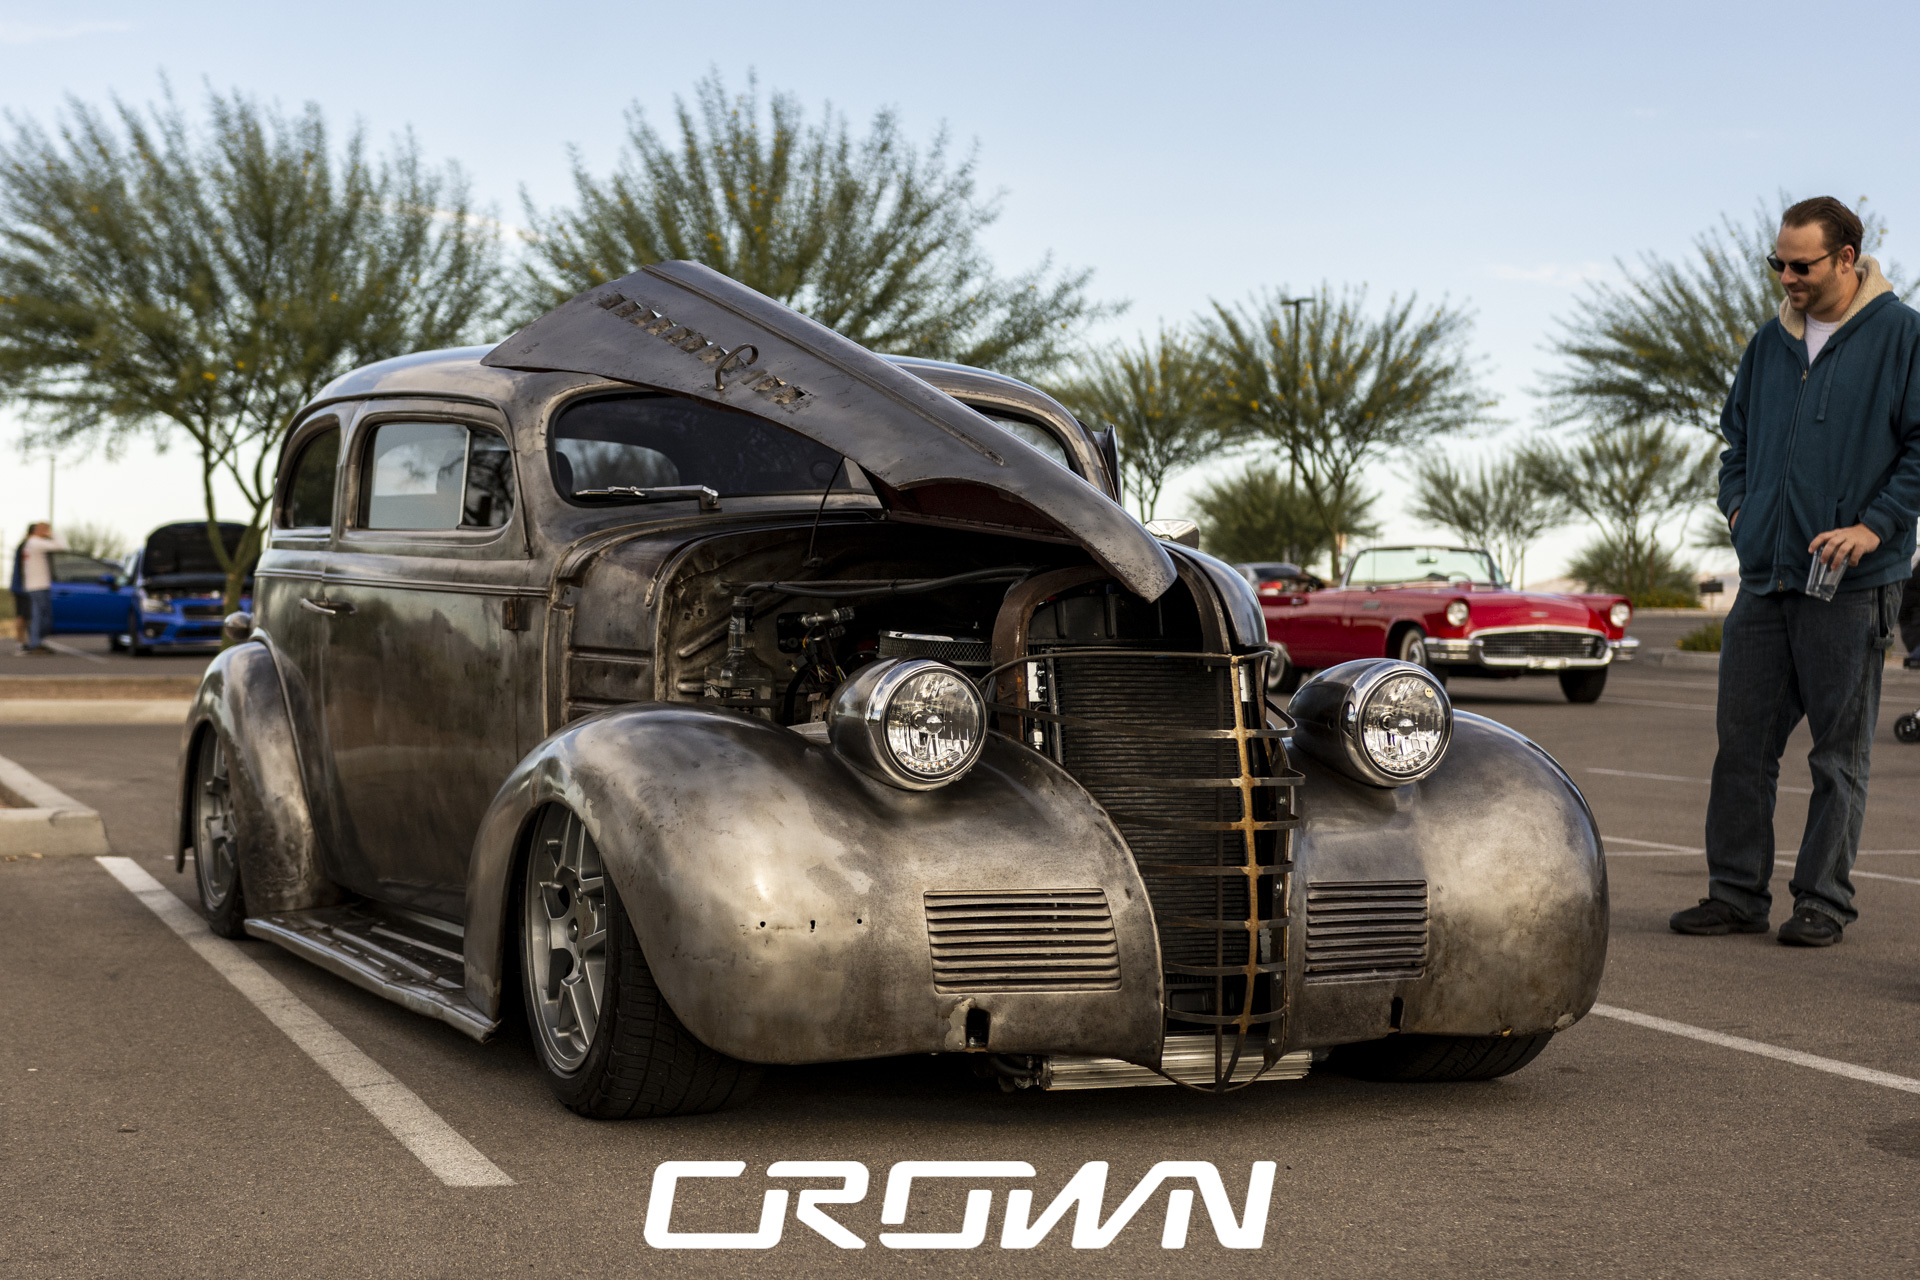 rat rod classic car at topgolf tucson Arizona crown concepts